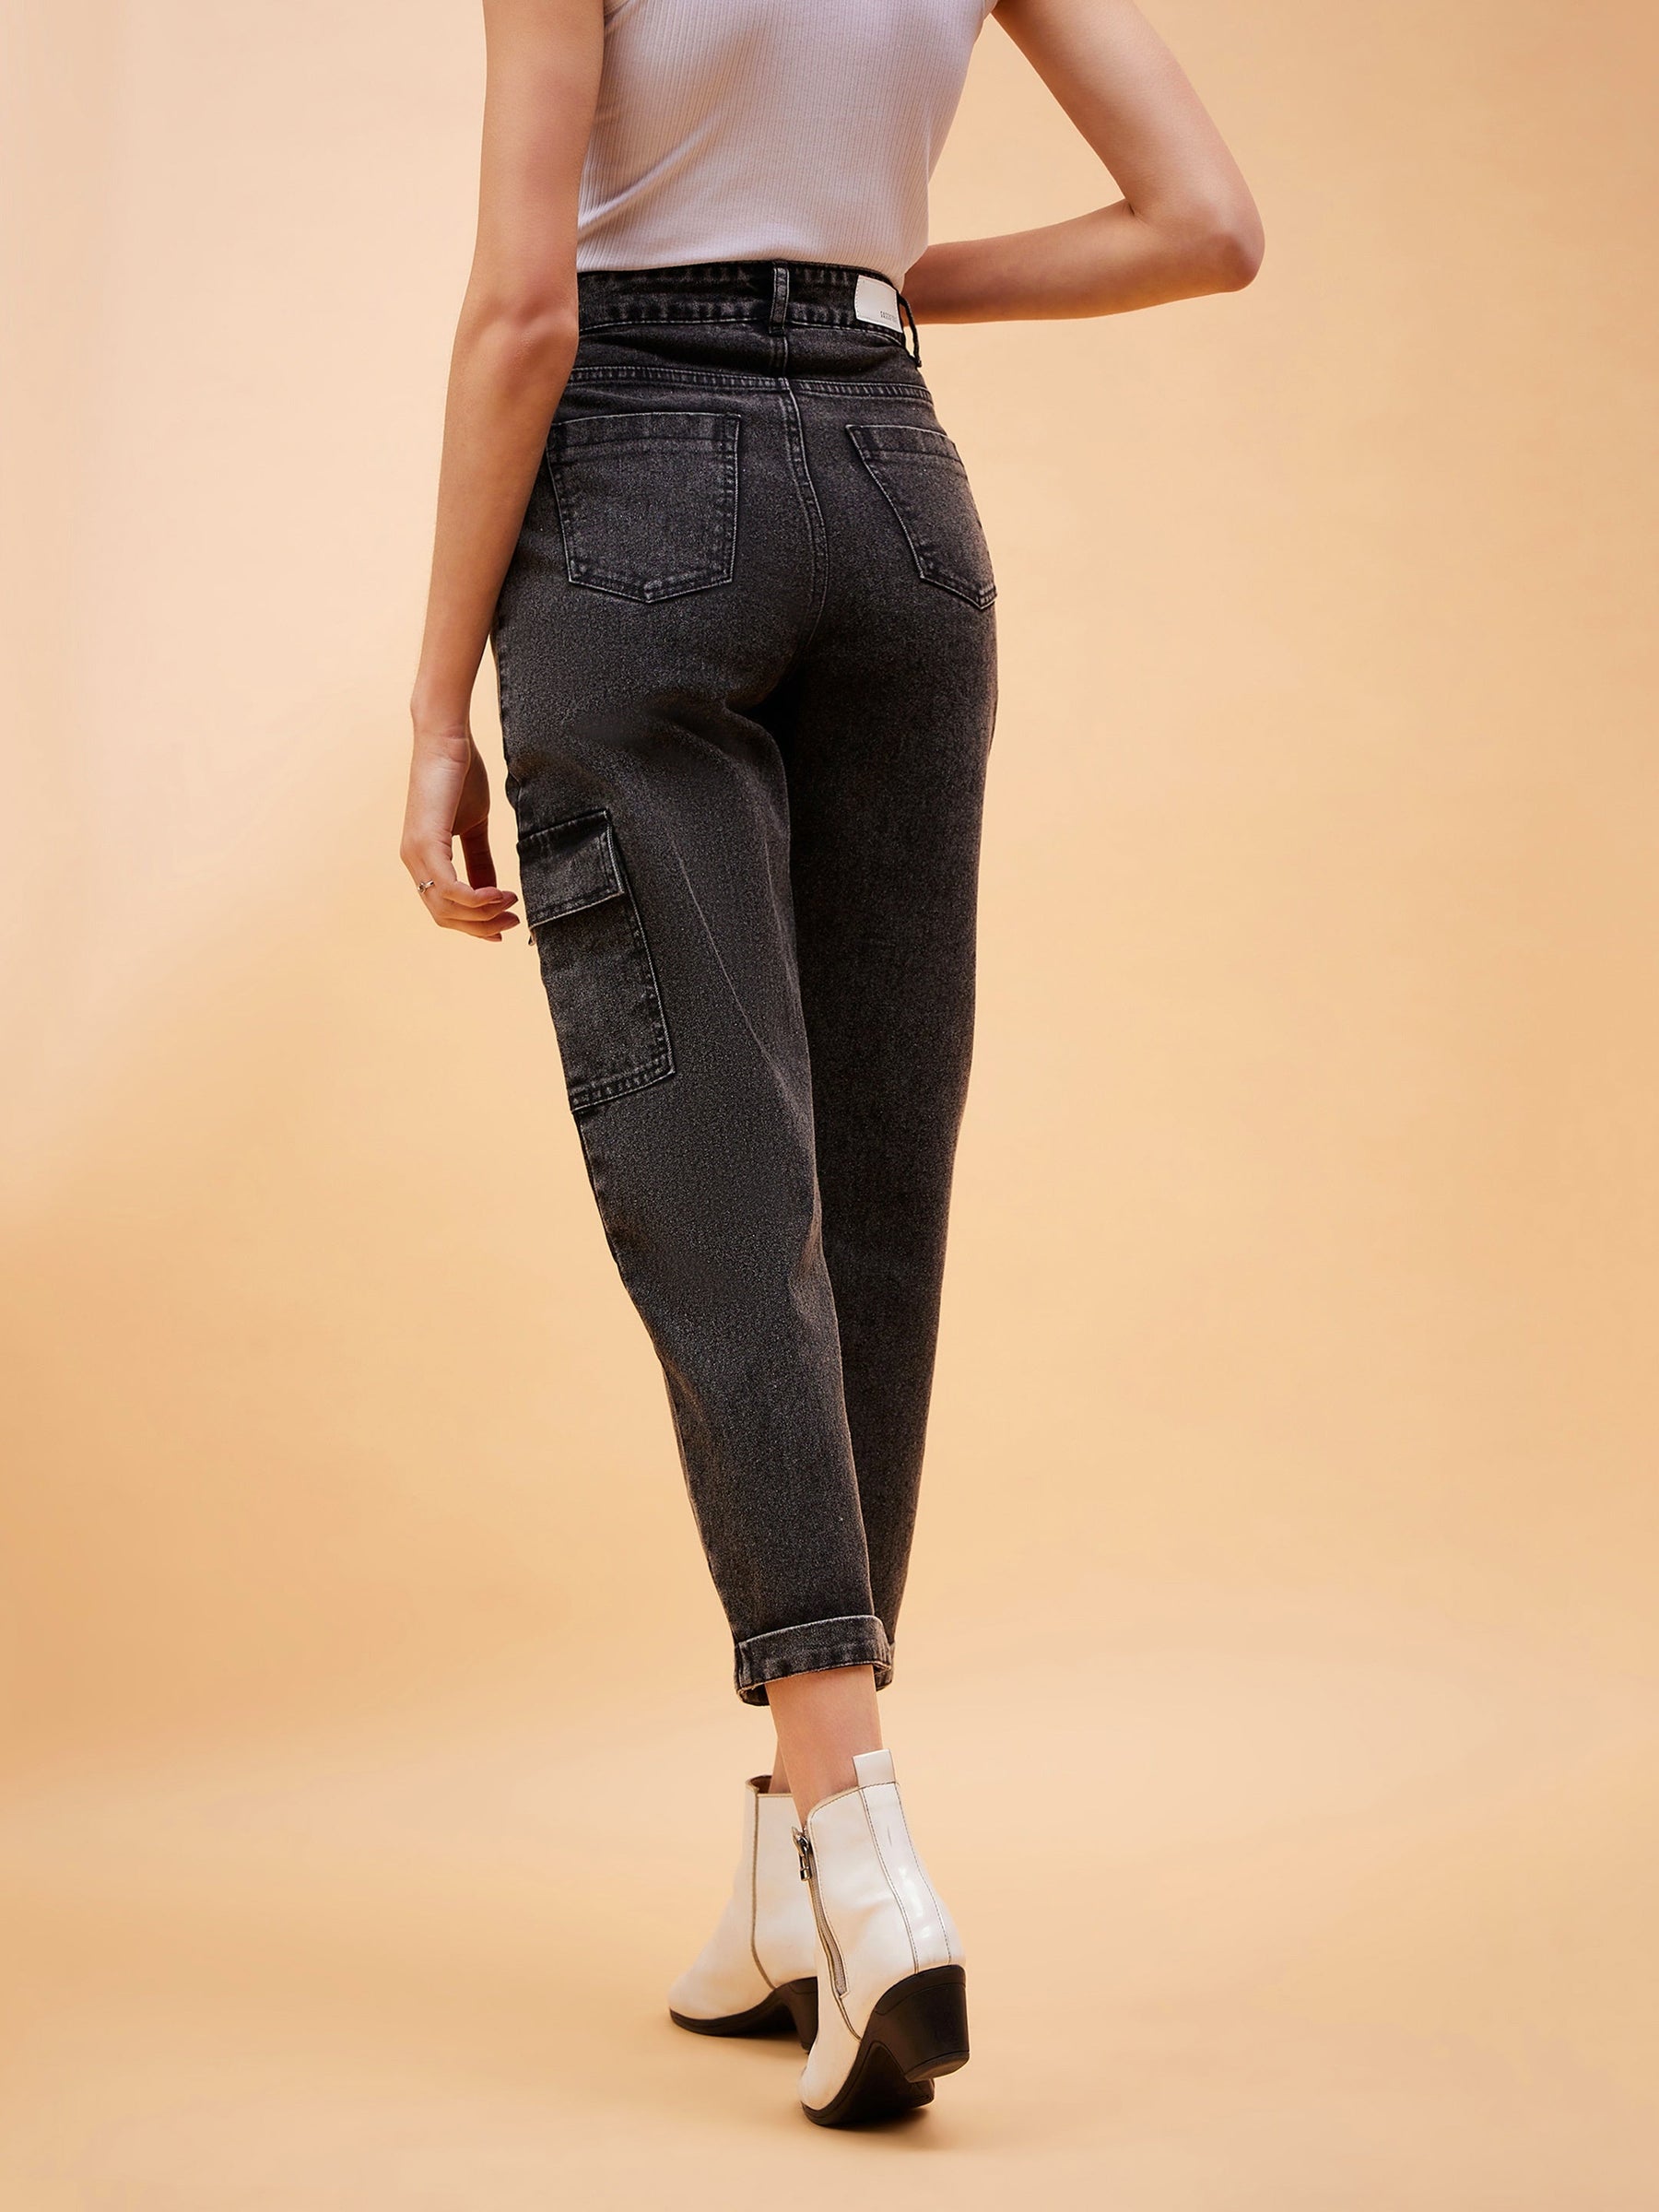 Black Multi Pockets Balloon Fit Jeans-SASSAFRAS BASICS